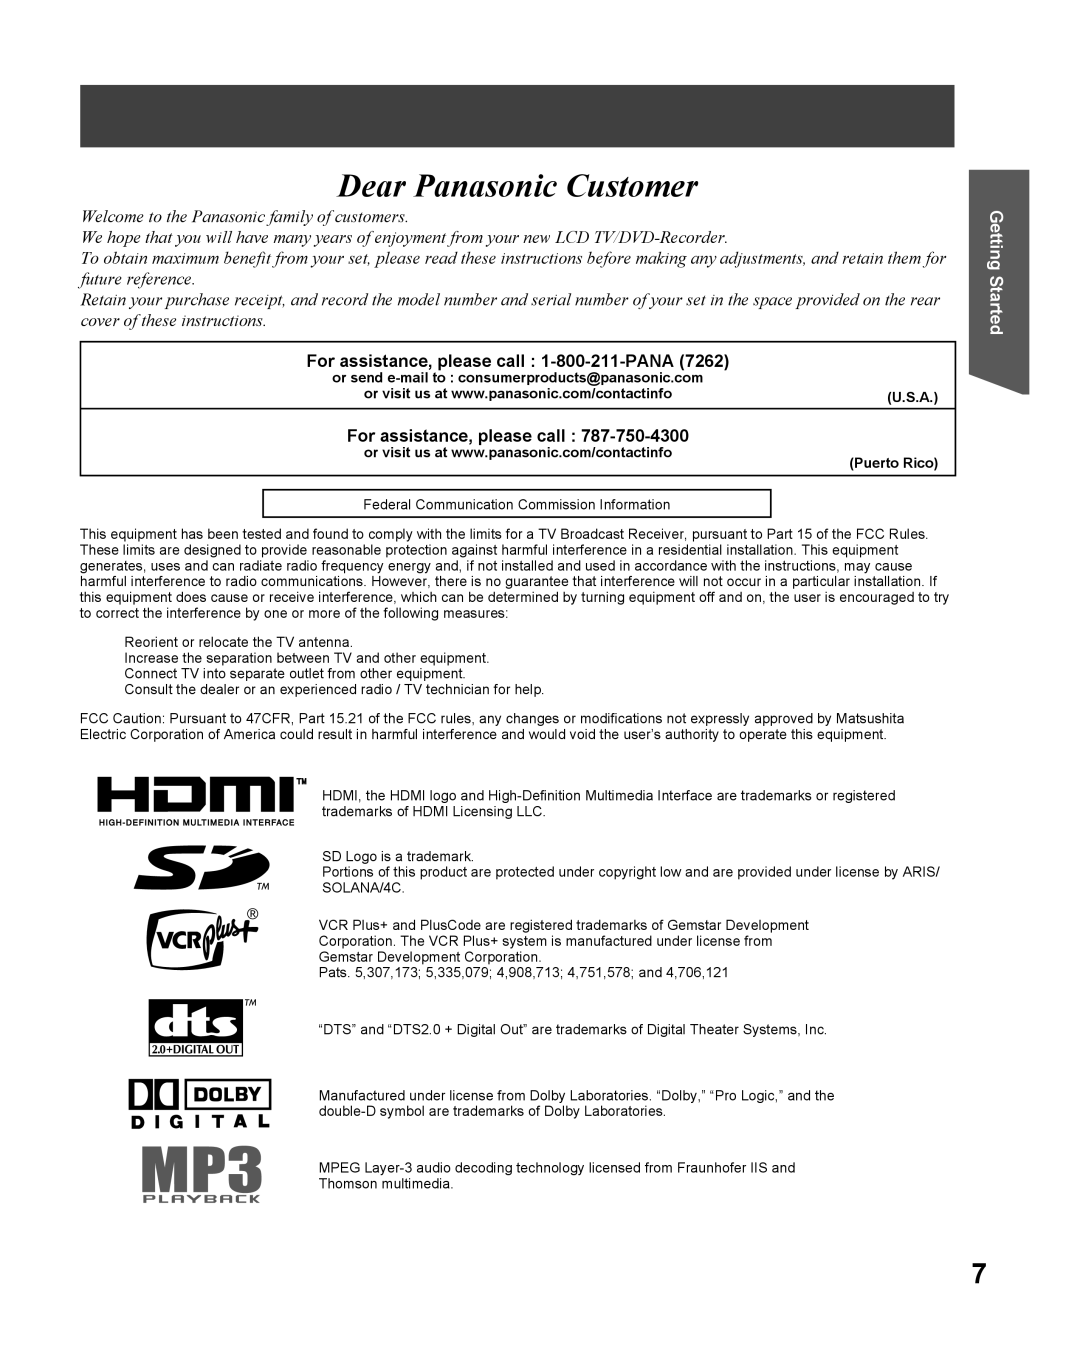 Panasonic TC 22LR30 manual For assistance, please call 1-800-211-PANA, Dear Panasonic Customer, Getting Started 